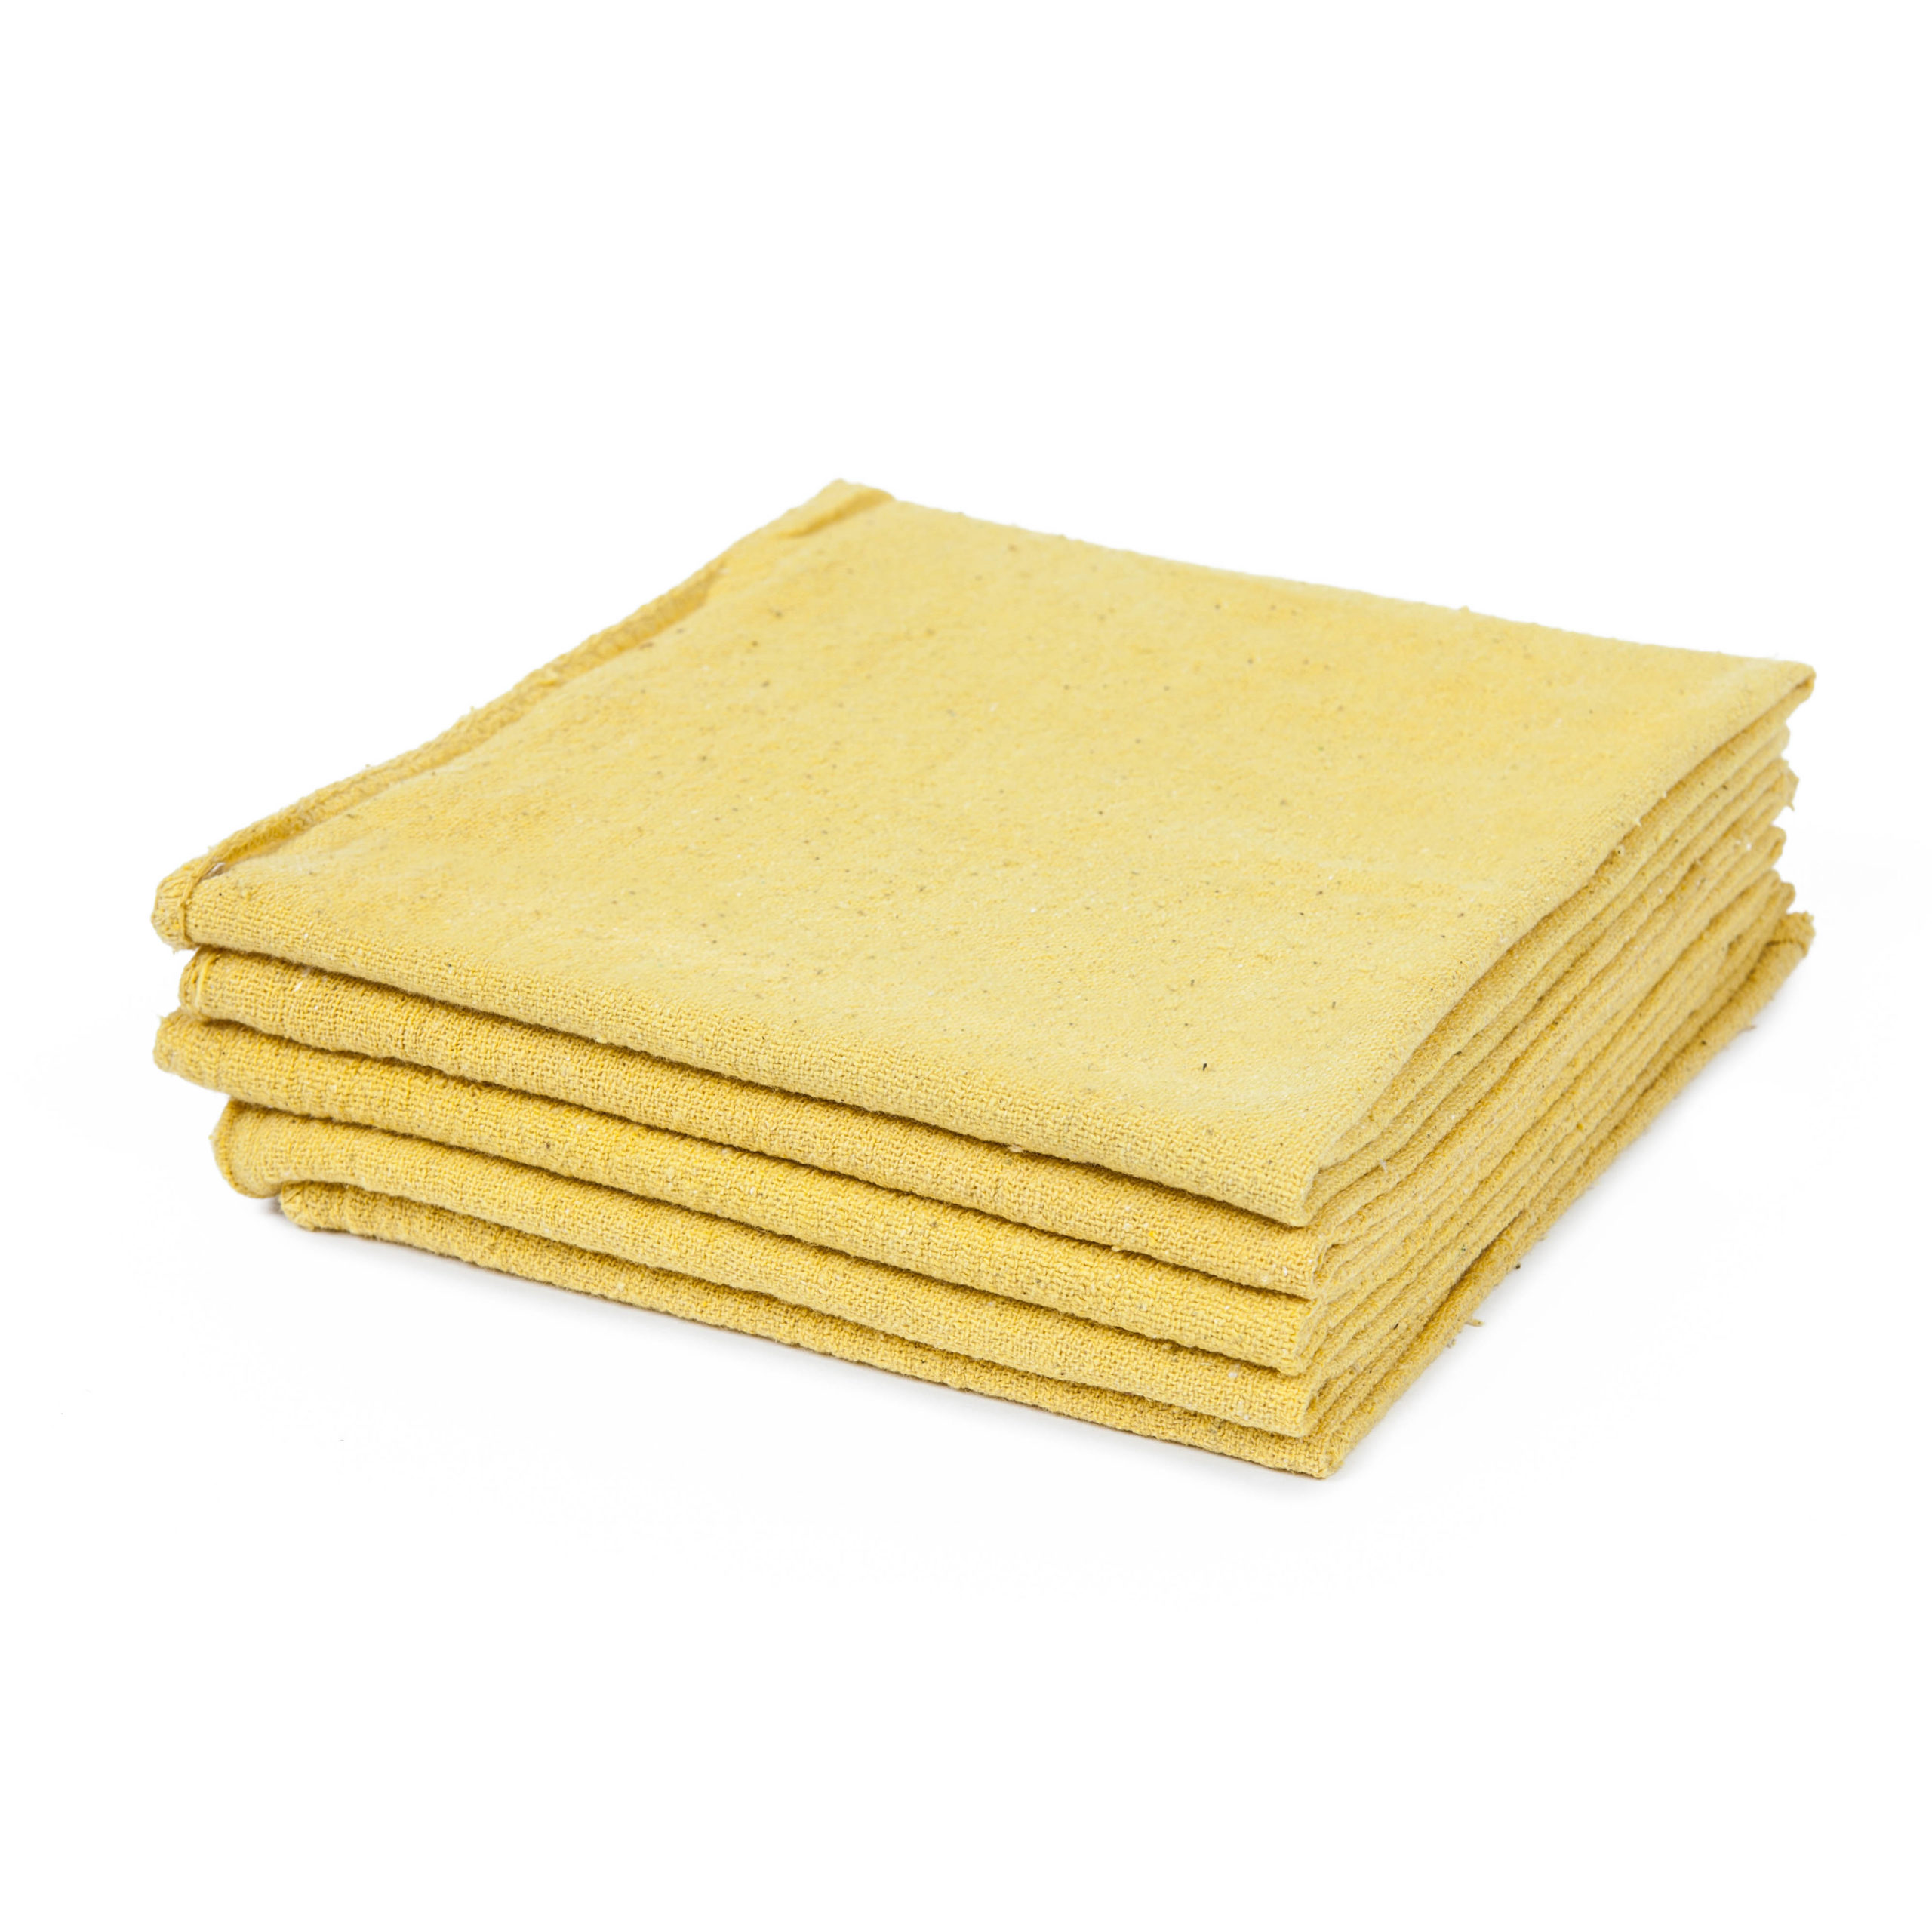 https://www.prudentialuniforms.com/wp-content/uploads/2016/06/pru_machinist-towel-yellow--scaled.jpg